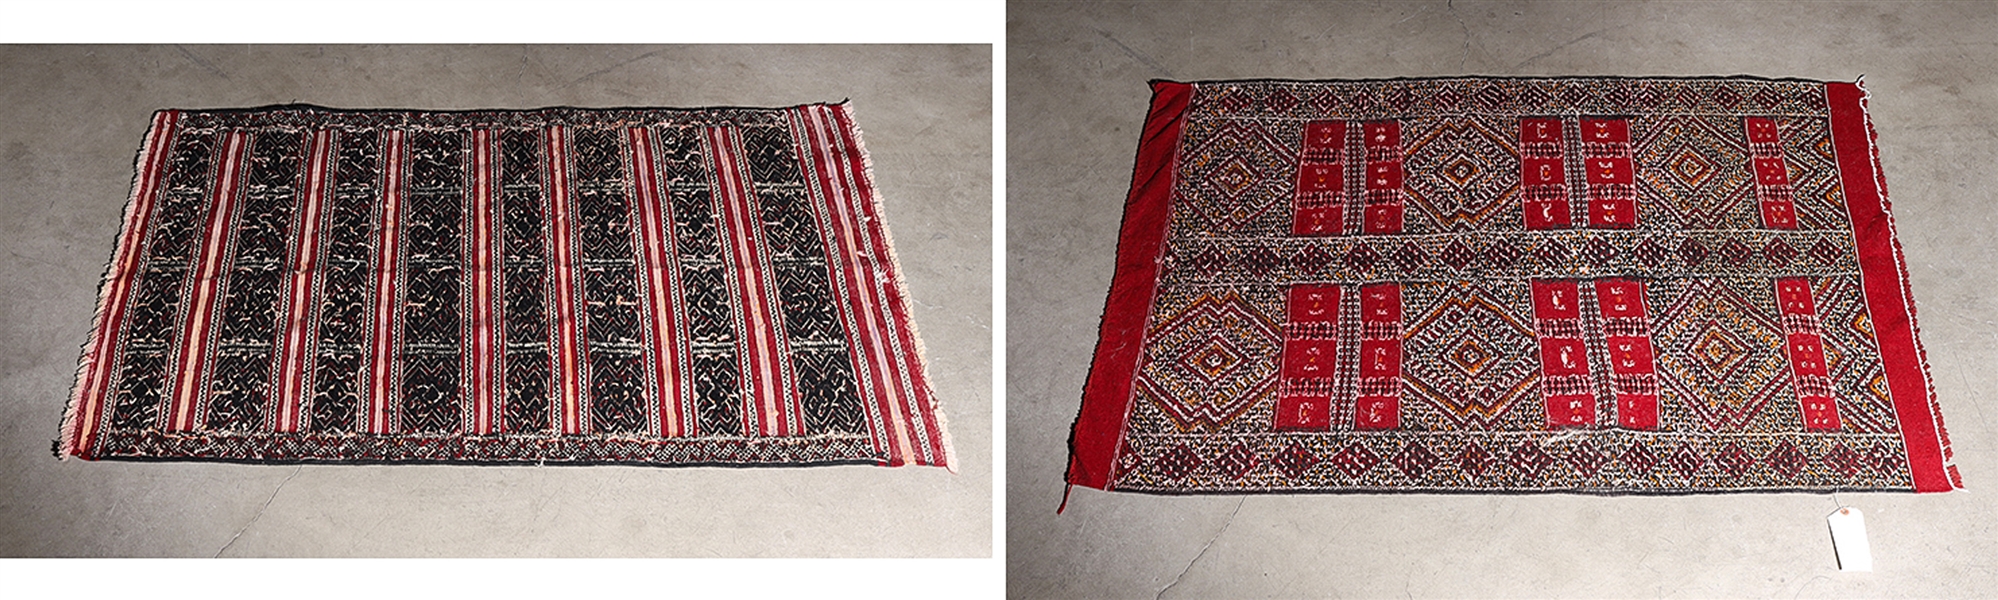 Lot of two Afghan Kilim rugs both 2d6347